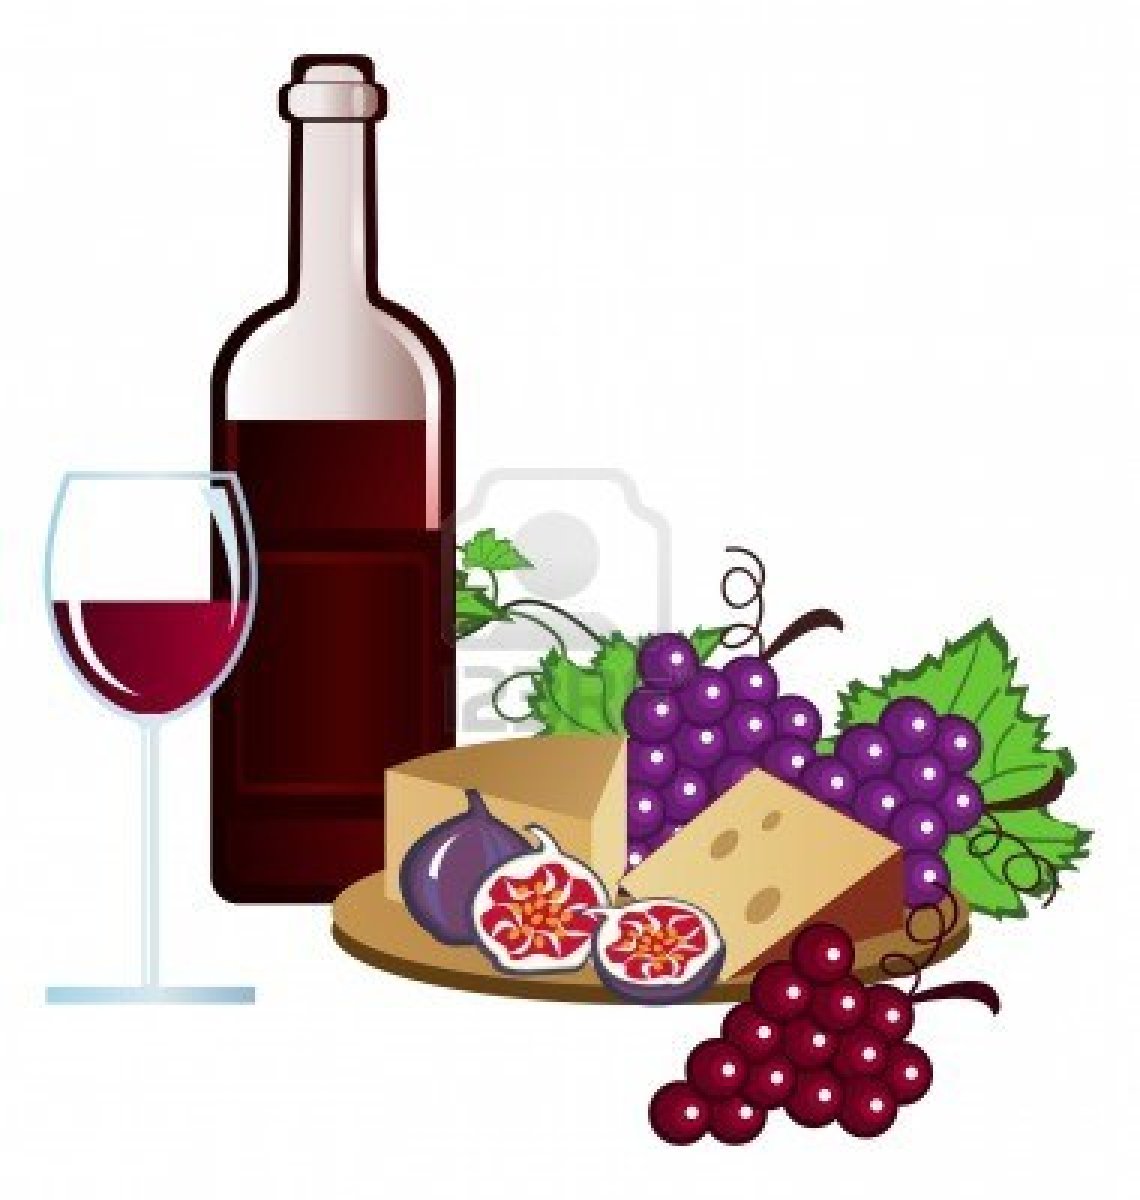 grape clipart wine tasting